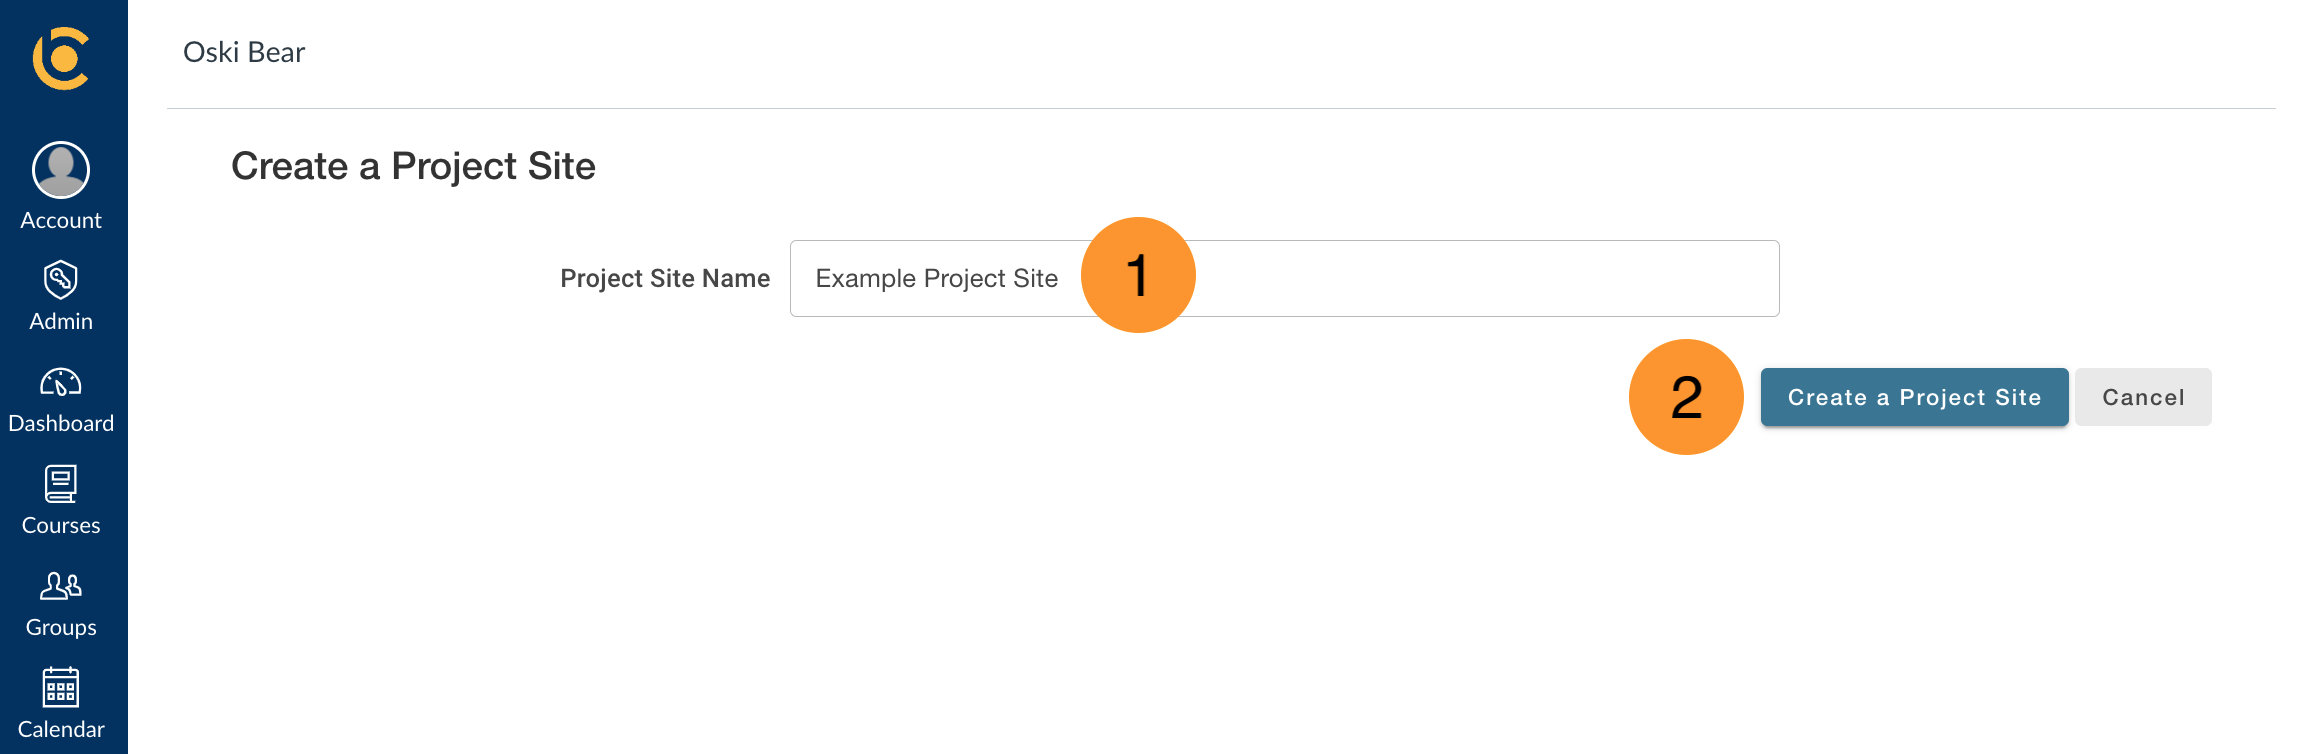 Screenshot of Create a Project Site screen